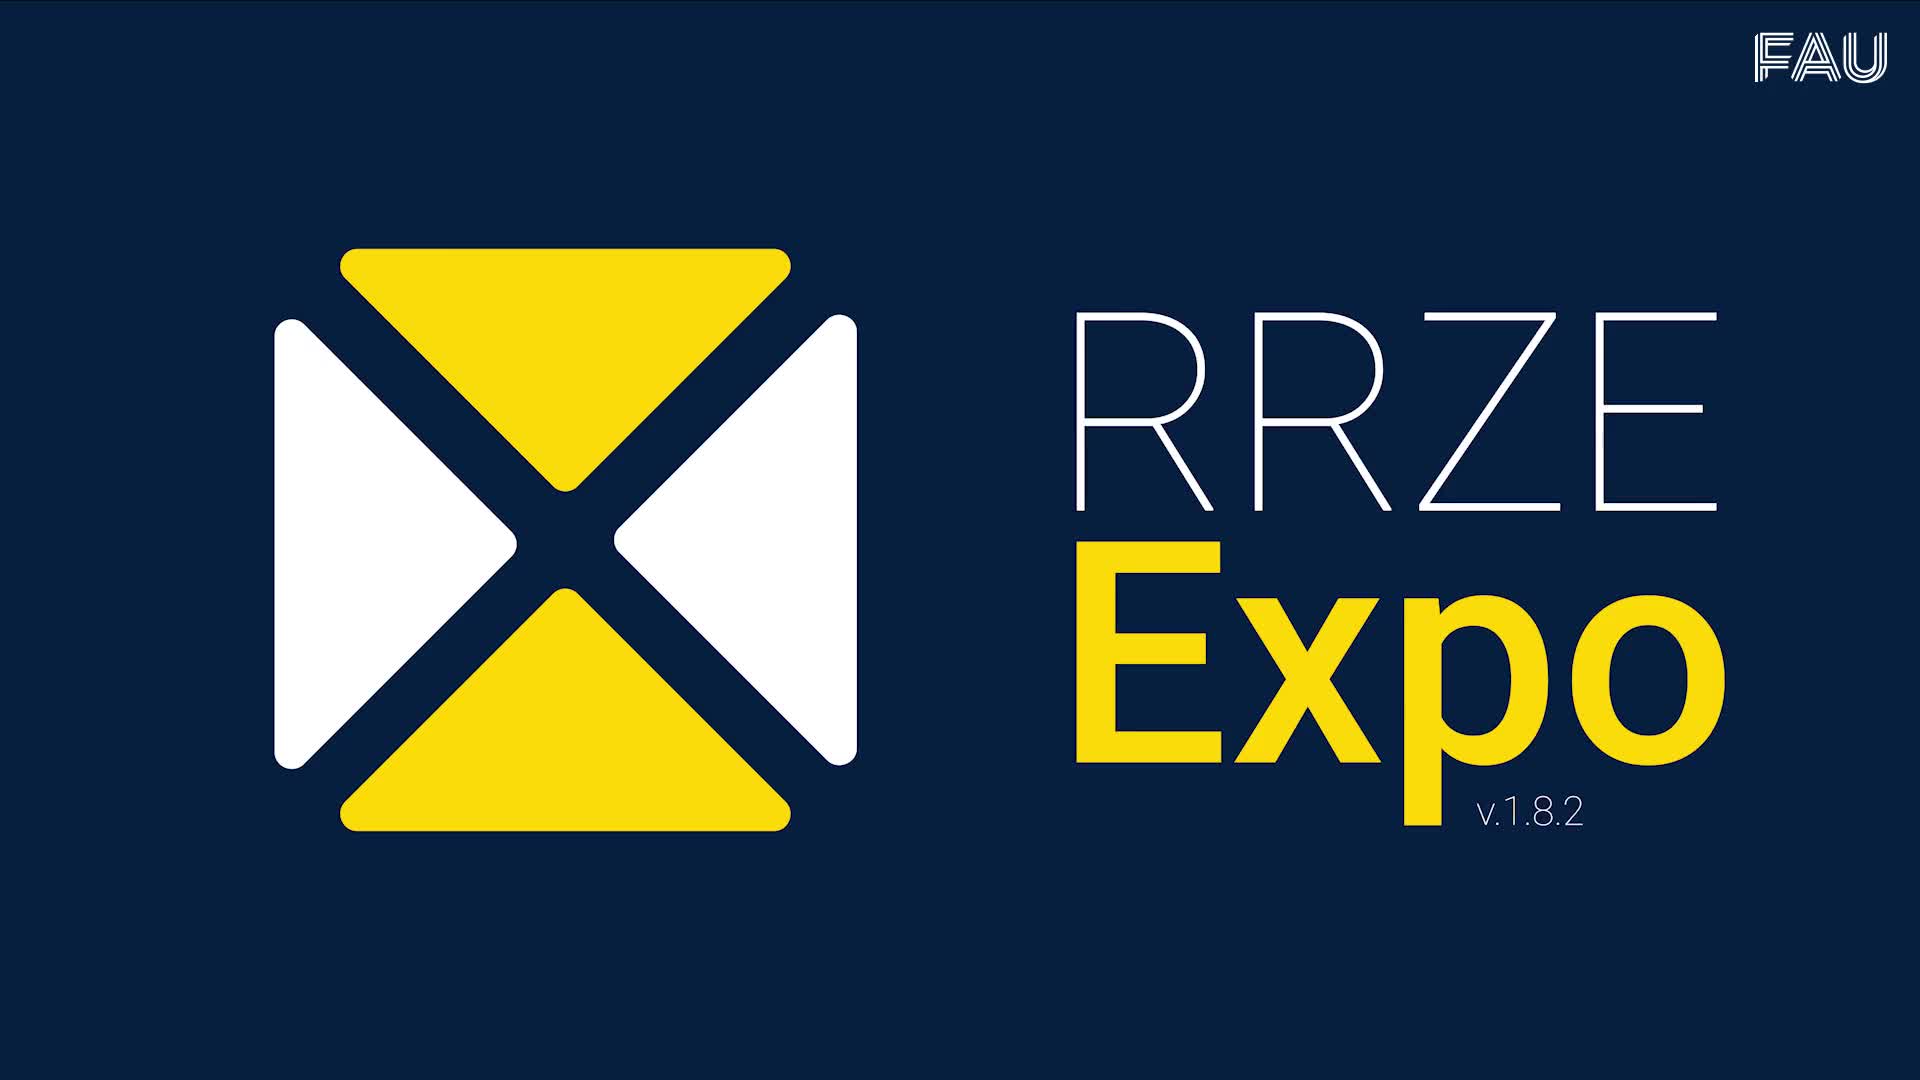 RRZE Expo - Eine Messehalle anlegen preview image